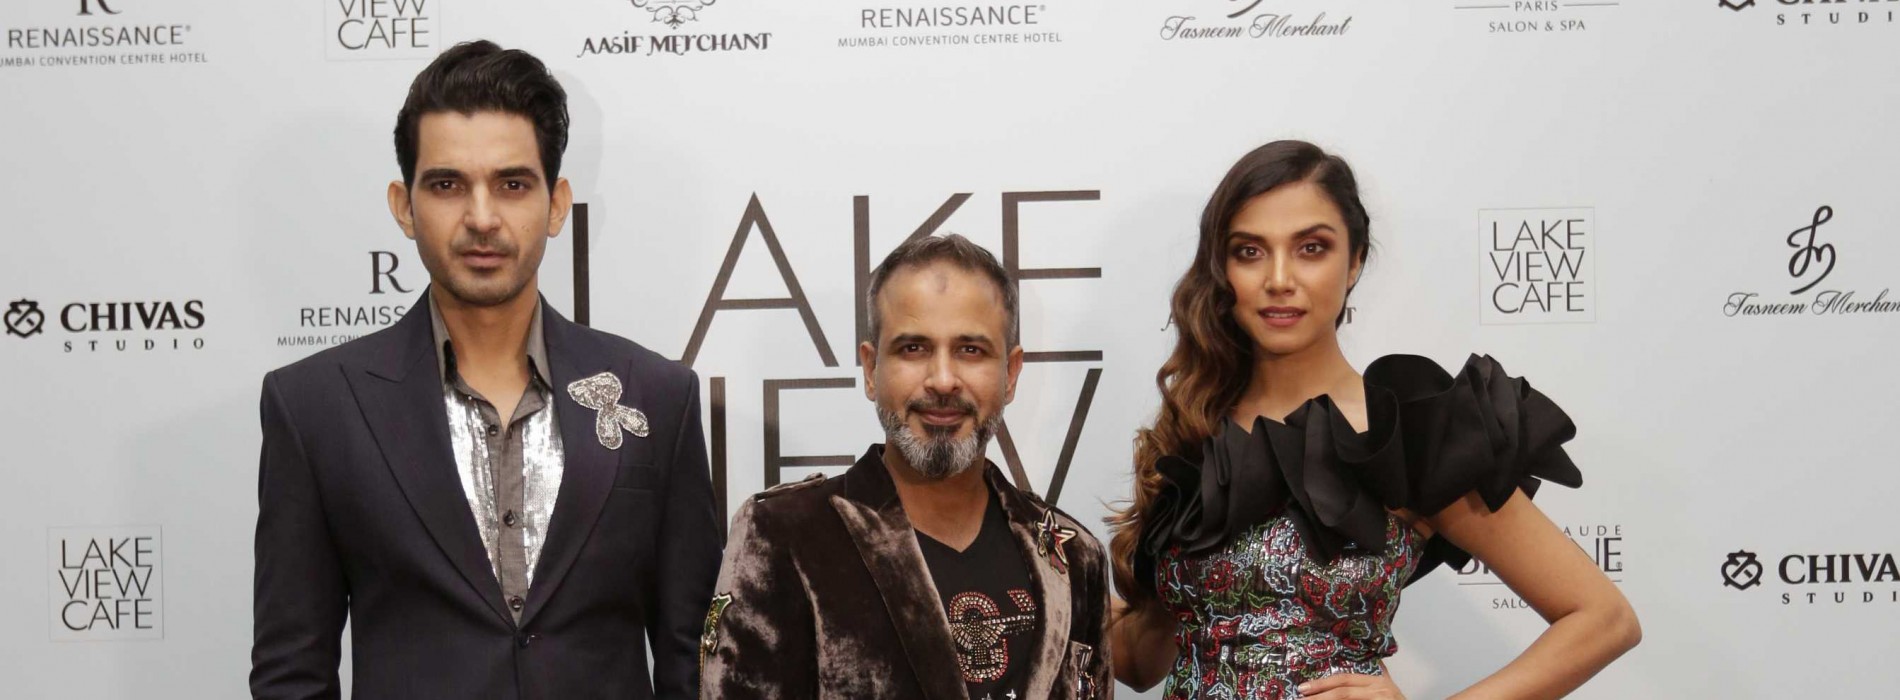 Renaissance launches ‘Lake View Café’ in Mumbai